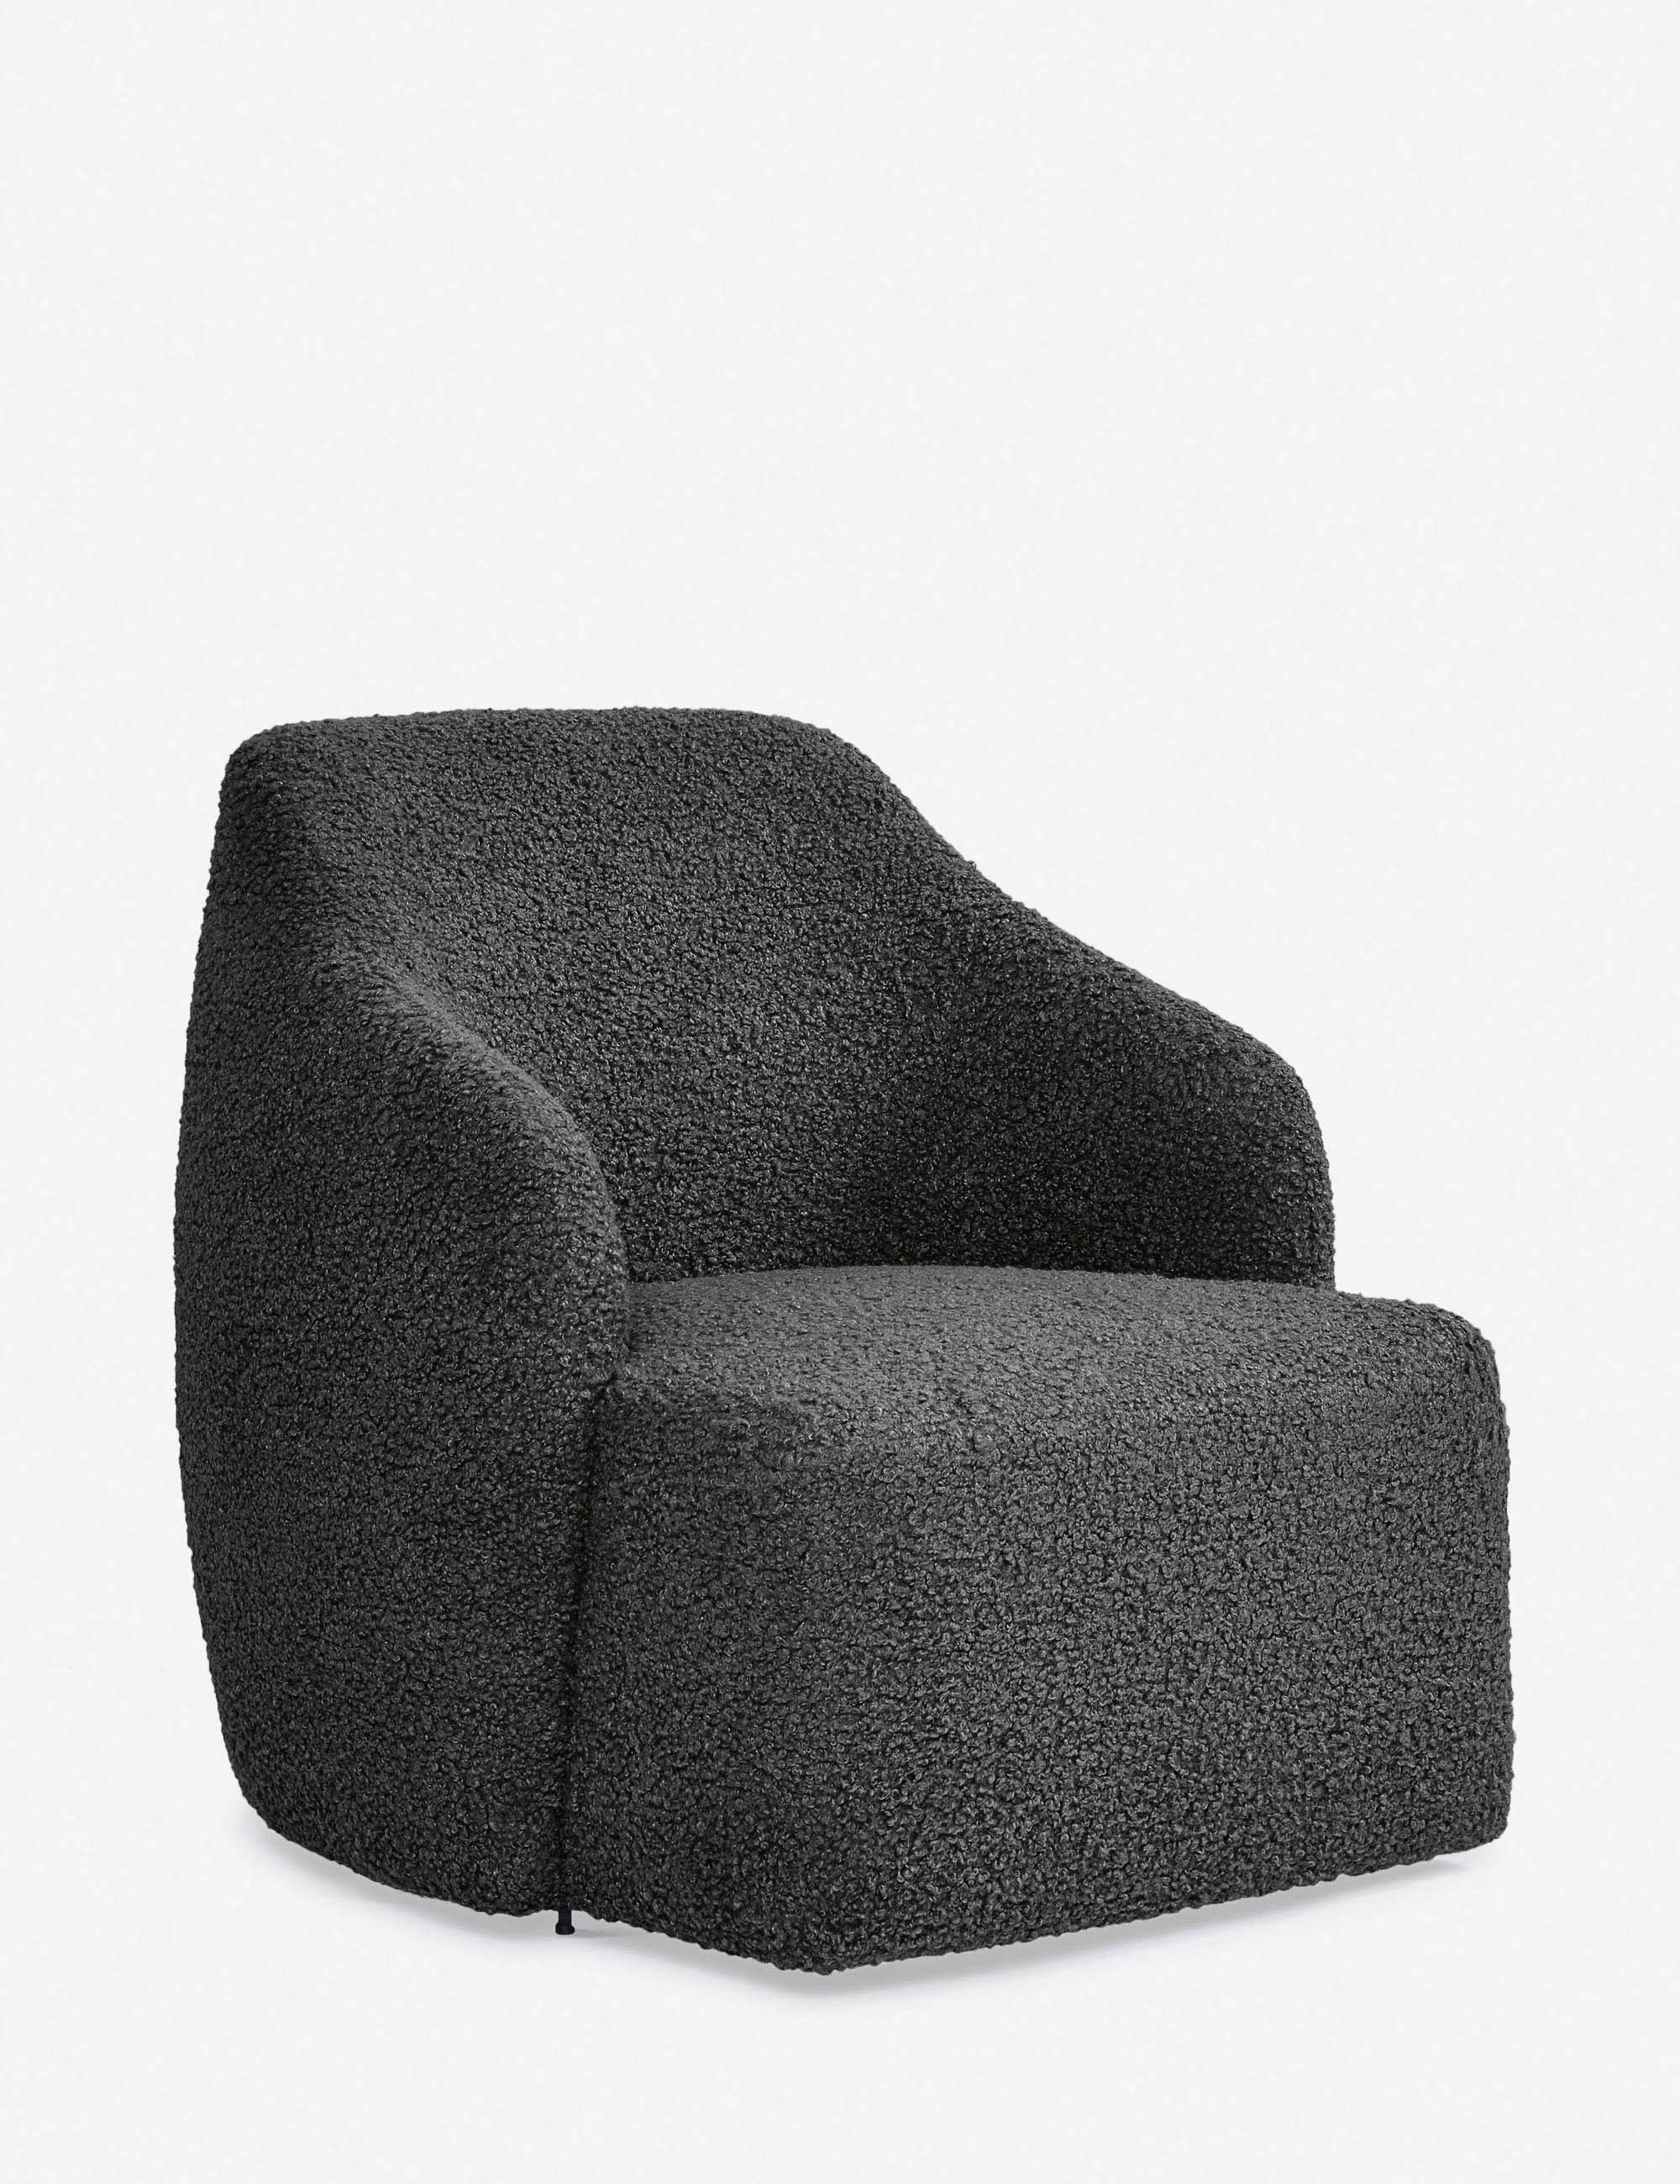 Tobi Swivel Chair - Image 1